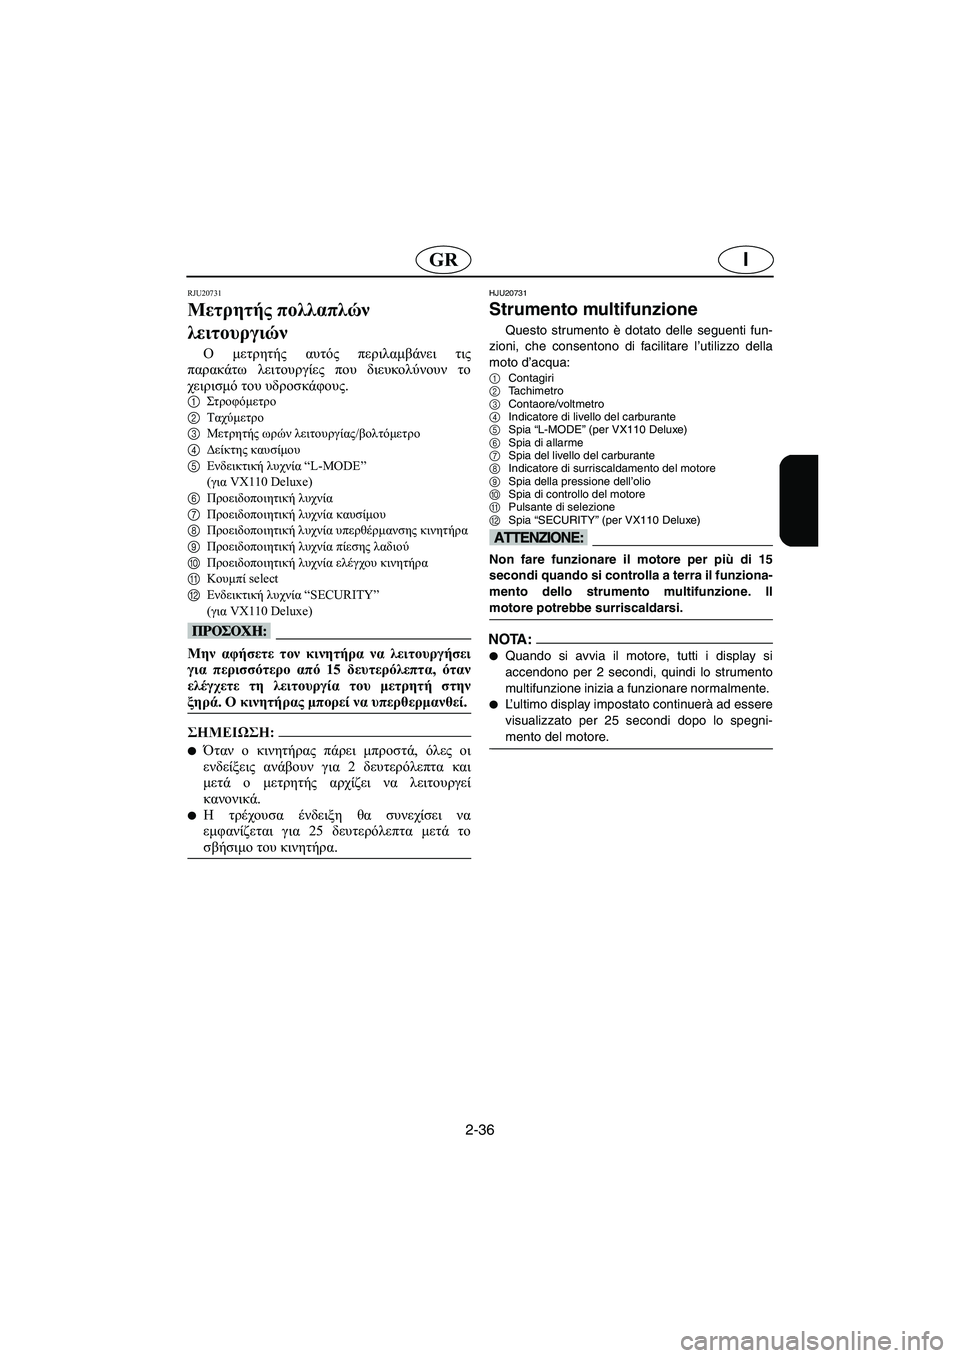 YAMAHA VX SPORT 2006  Manual de utilização (in Portuguese) 2-36
IGR
RJU20731
Μετρητής πολλαπλών 
λειτουργιών 
Ο μετρητής αυτός περιλαμβάνει τις
παρακάτω λειτουργίες που διευκ�